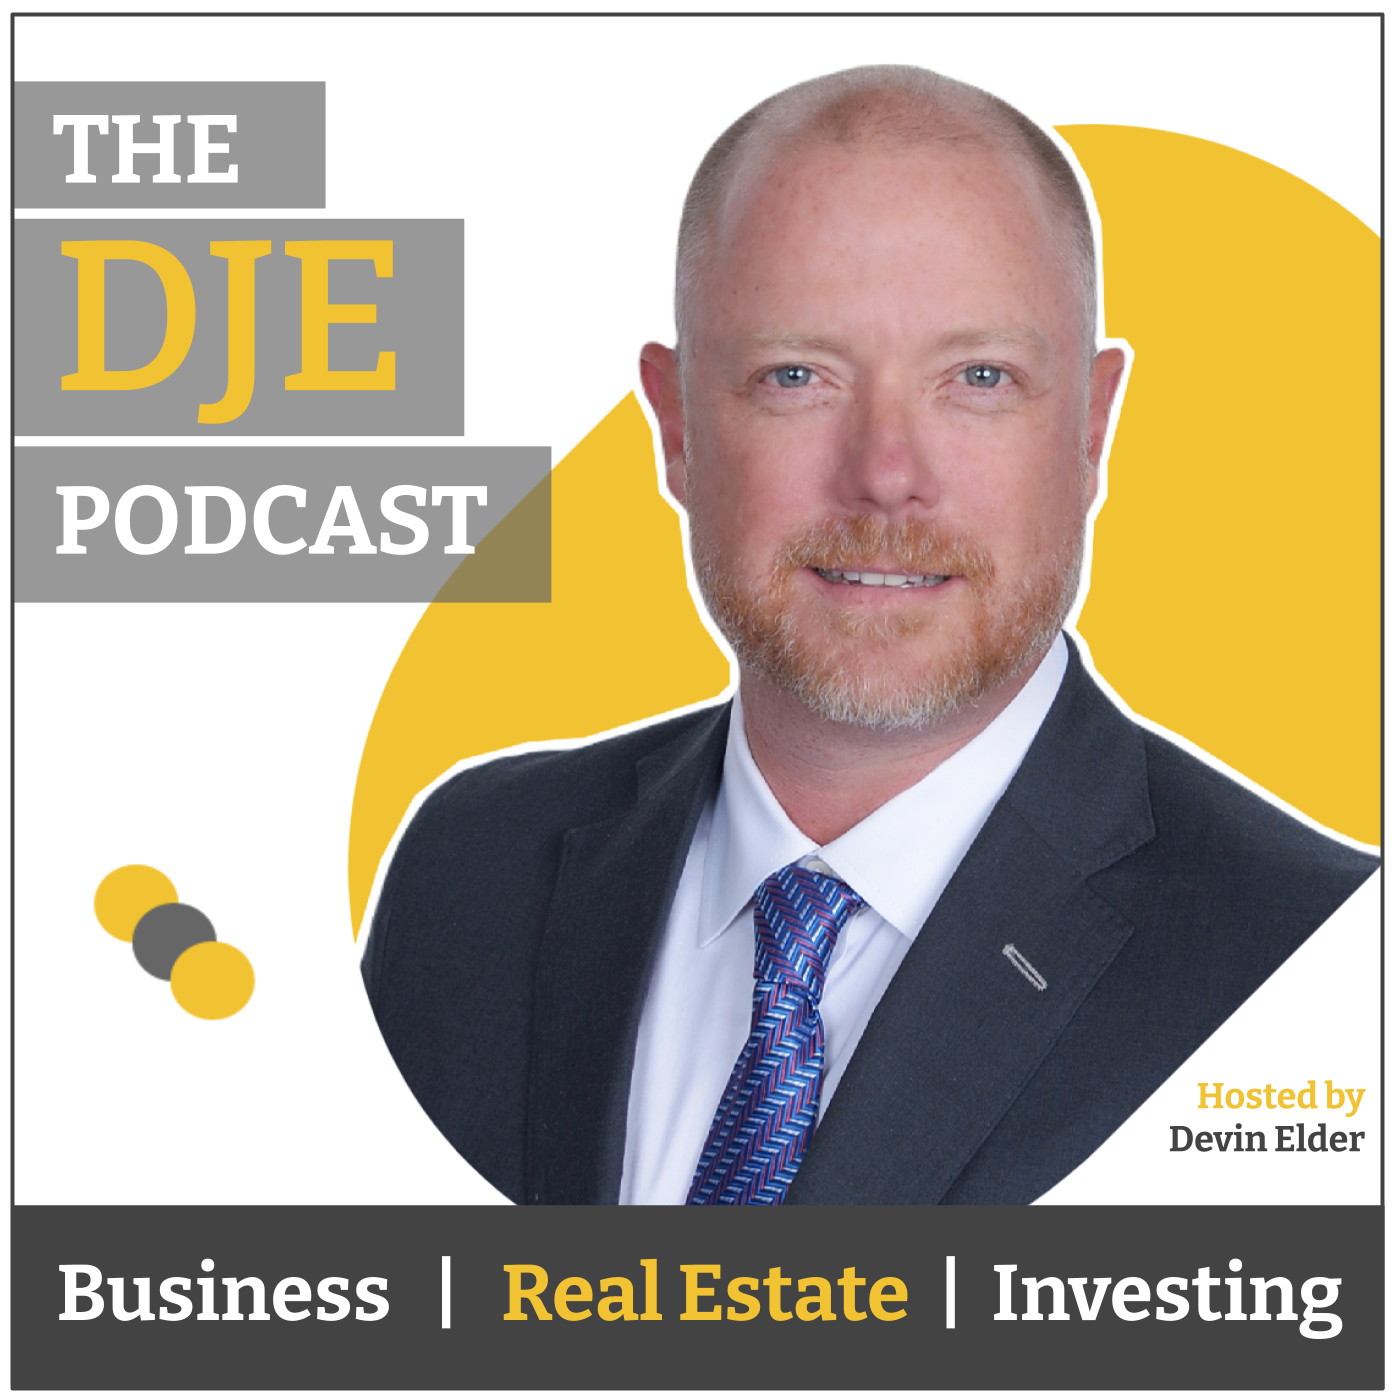 The DJE Podcast - Real Estate Investing with Devin Elder